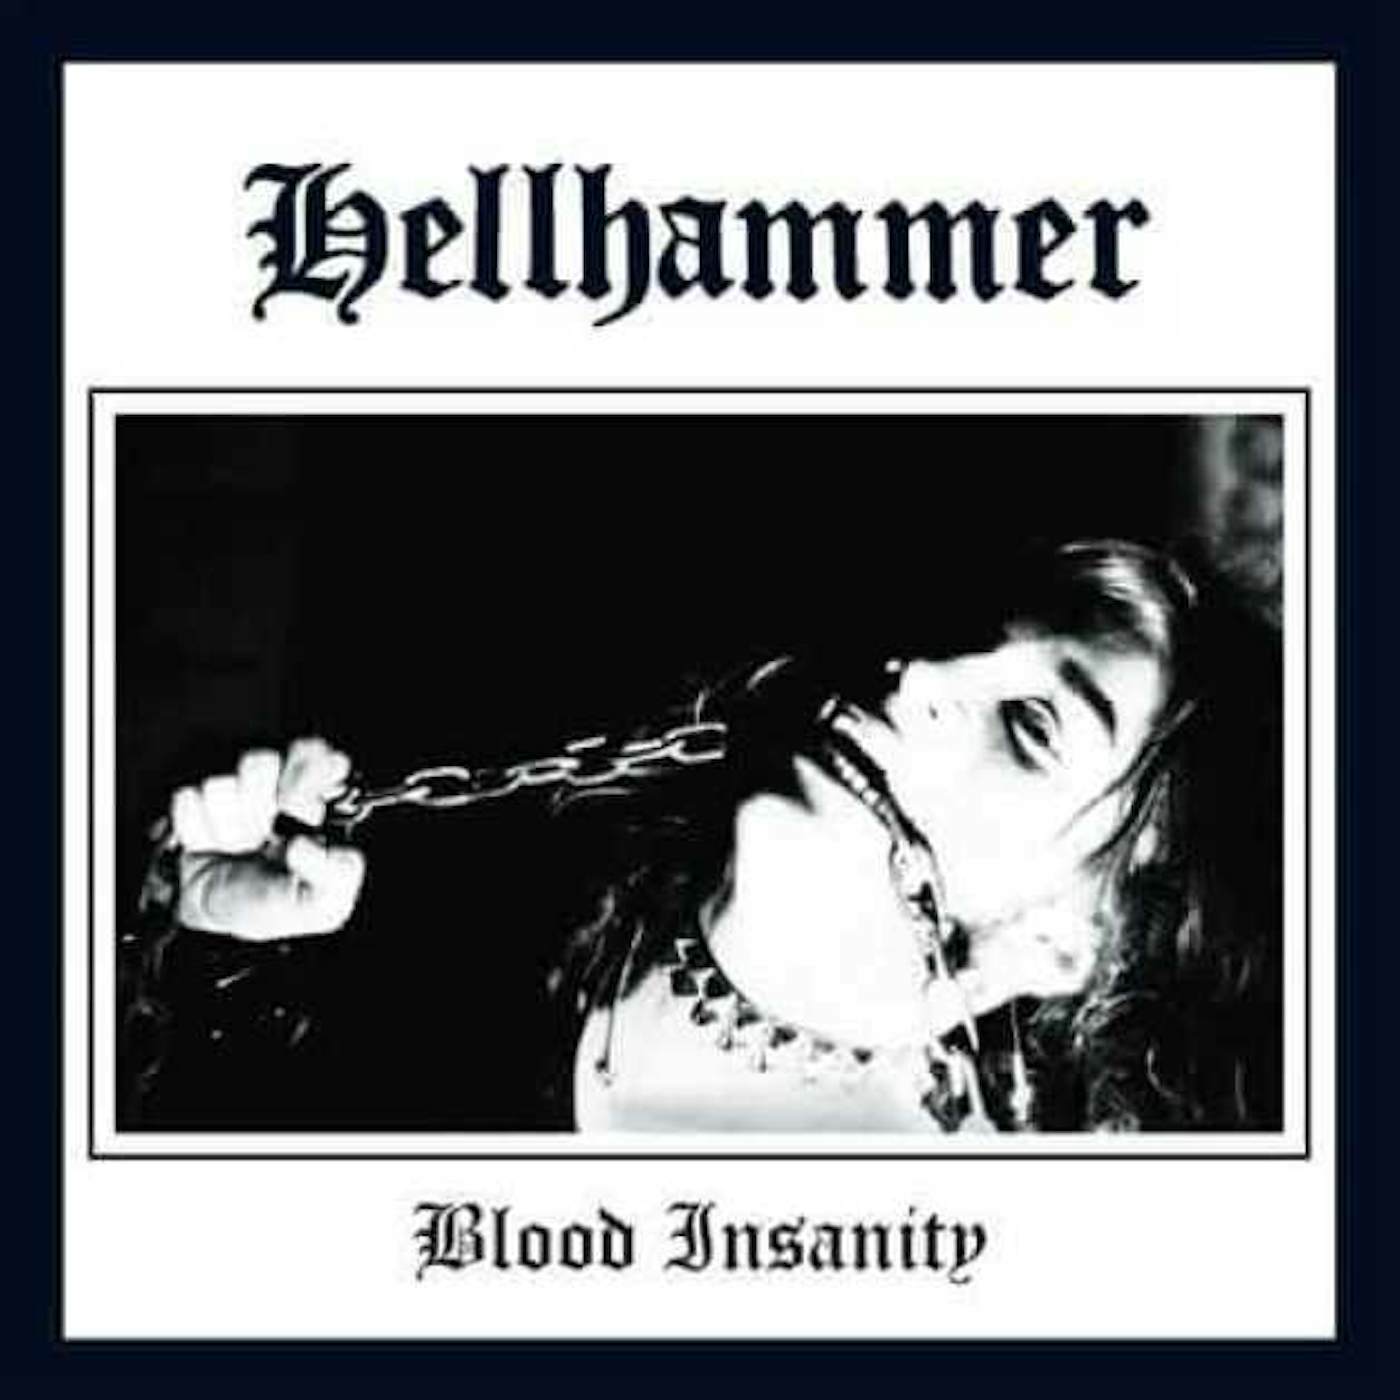 Hellhammer BLOOD INSANITY    (GER) Vinyl Record - Colored Vinyl, Gatefold Sleeve, White Vinyl